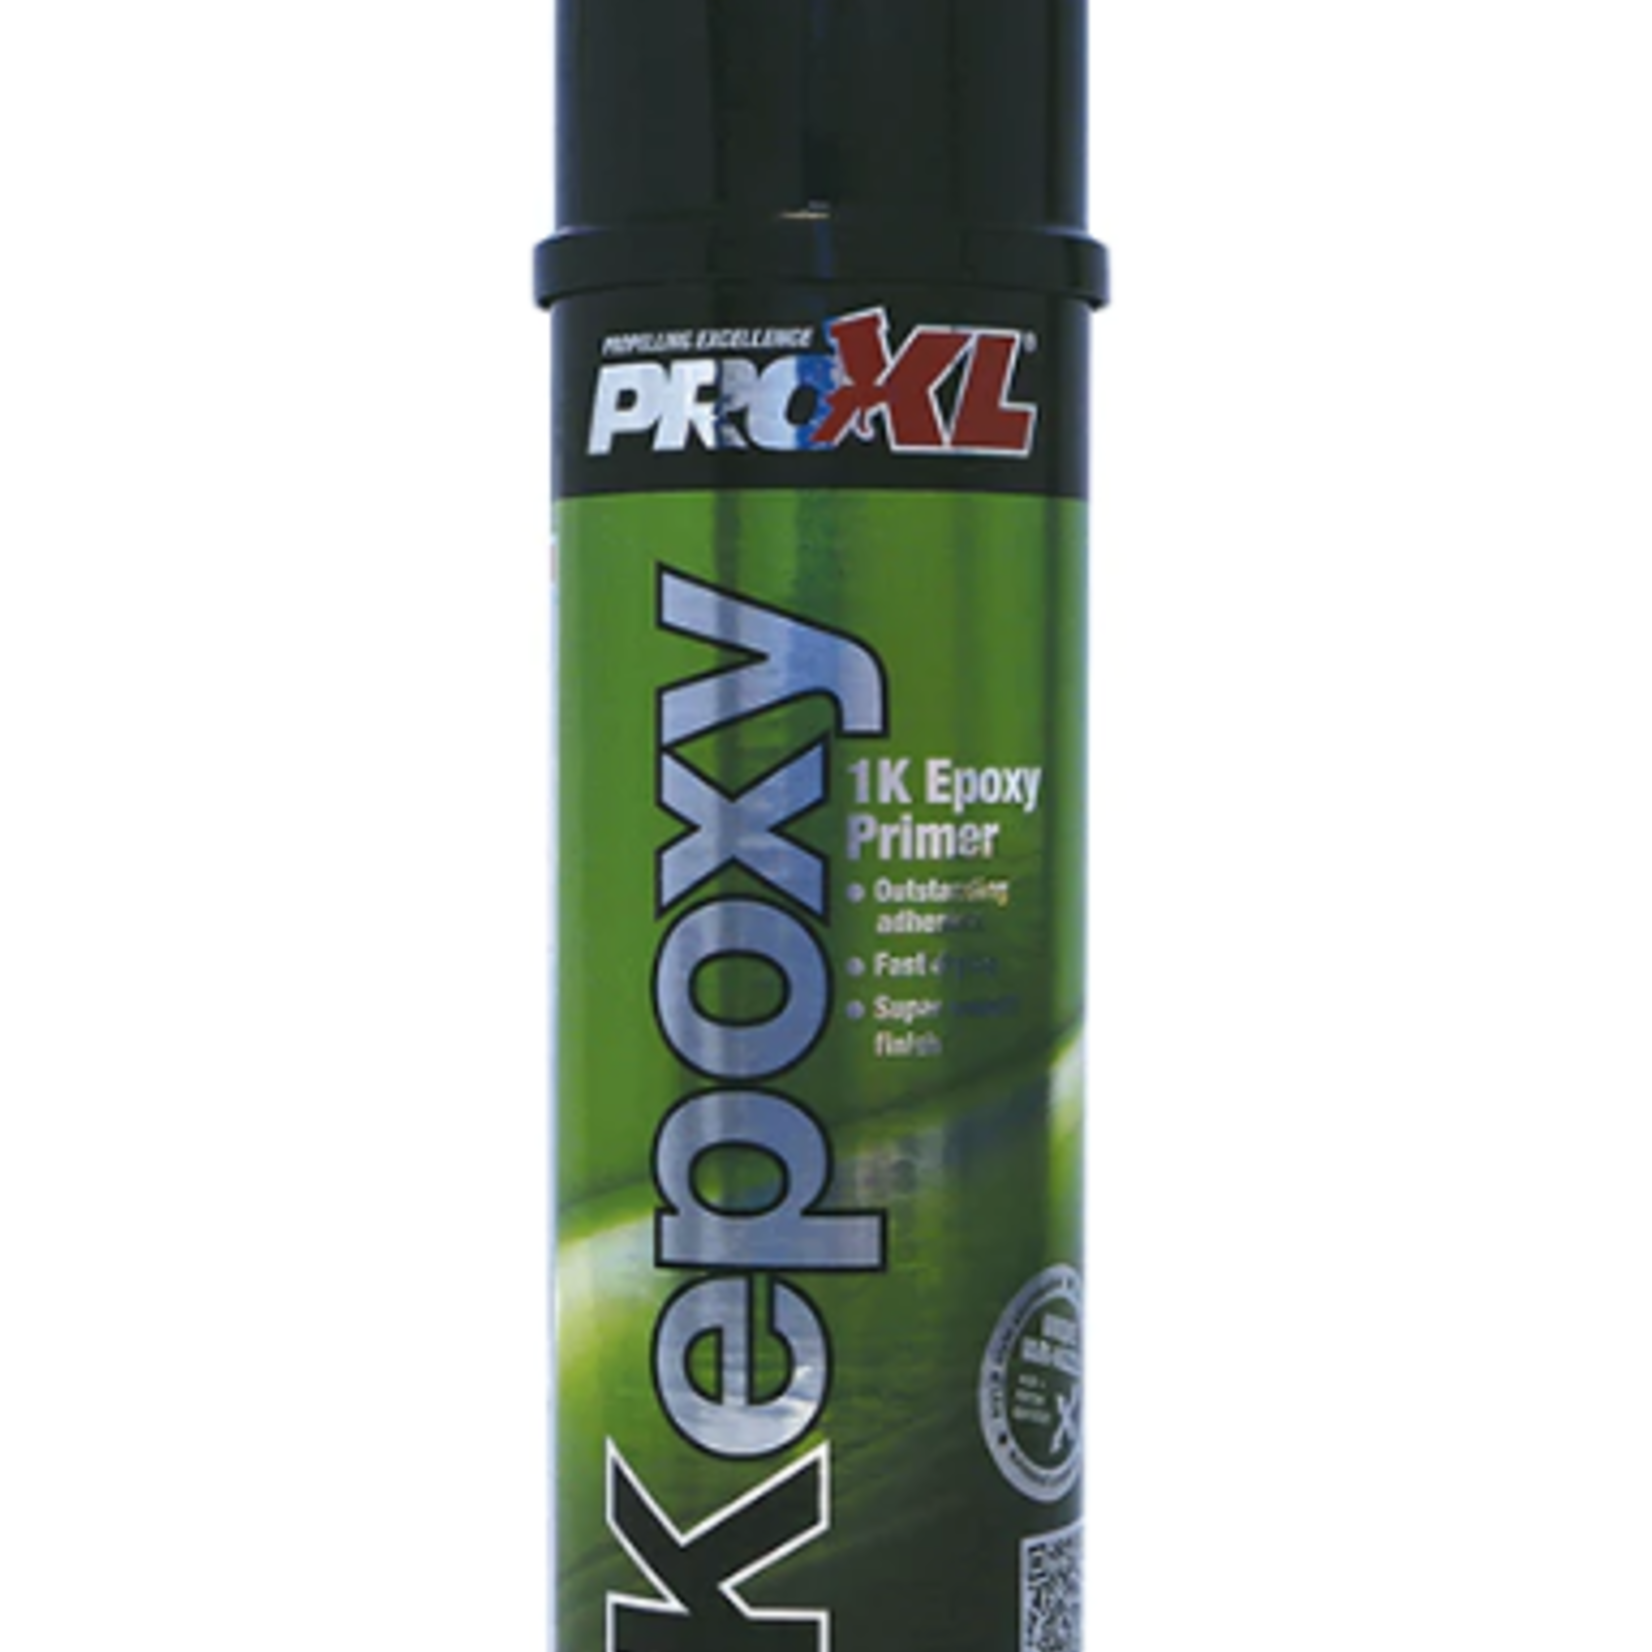 PRO XL PROXL - 1K Epoxy Primer Aerosol